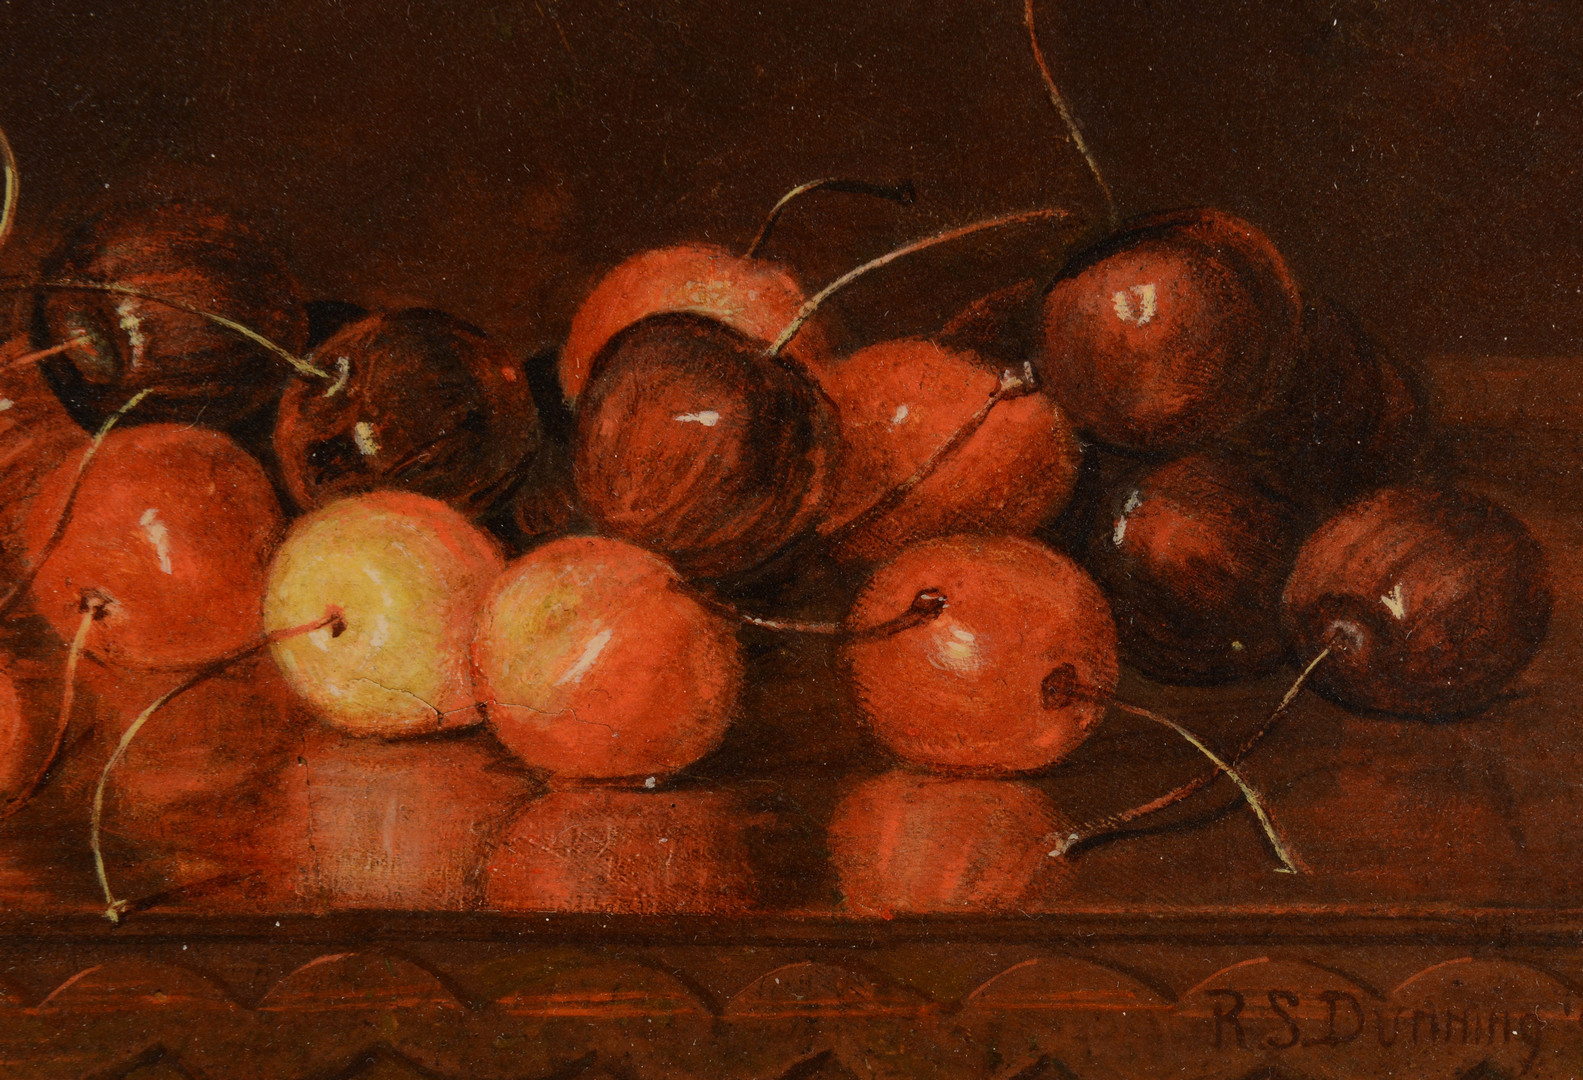 Lot 177: Robert S. Dunning, "Cherries"